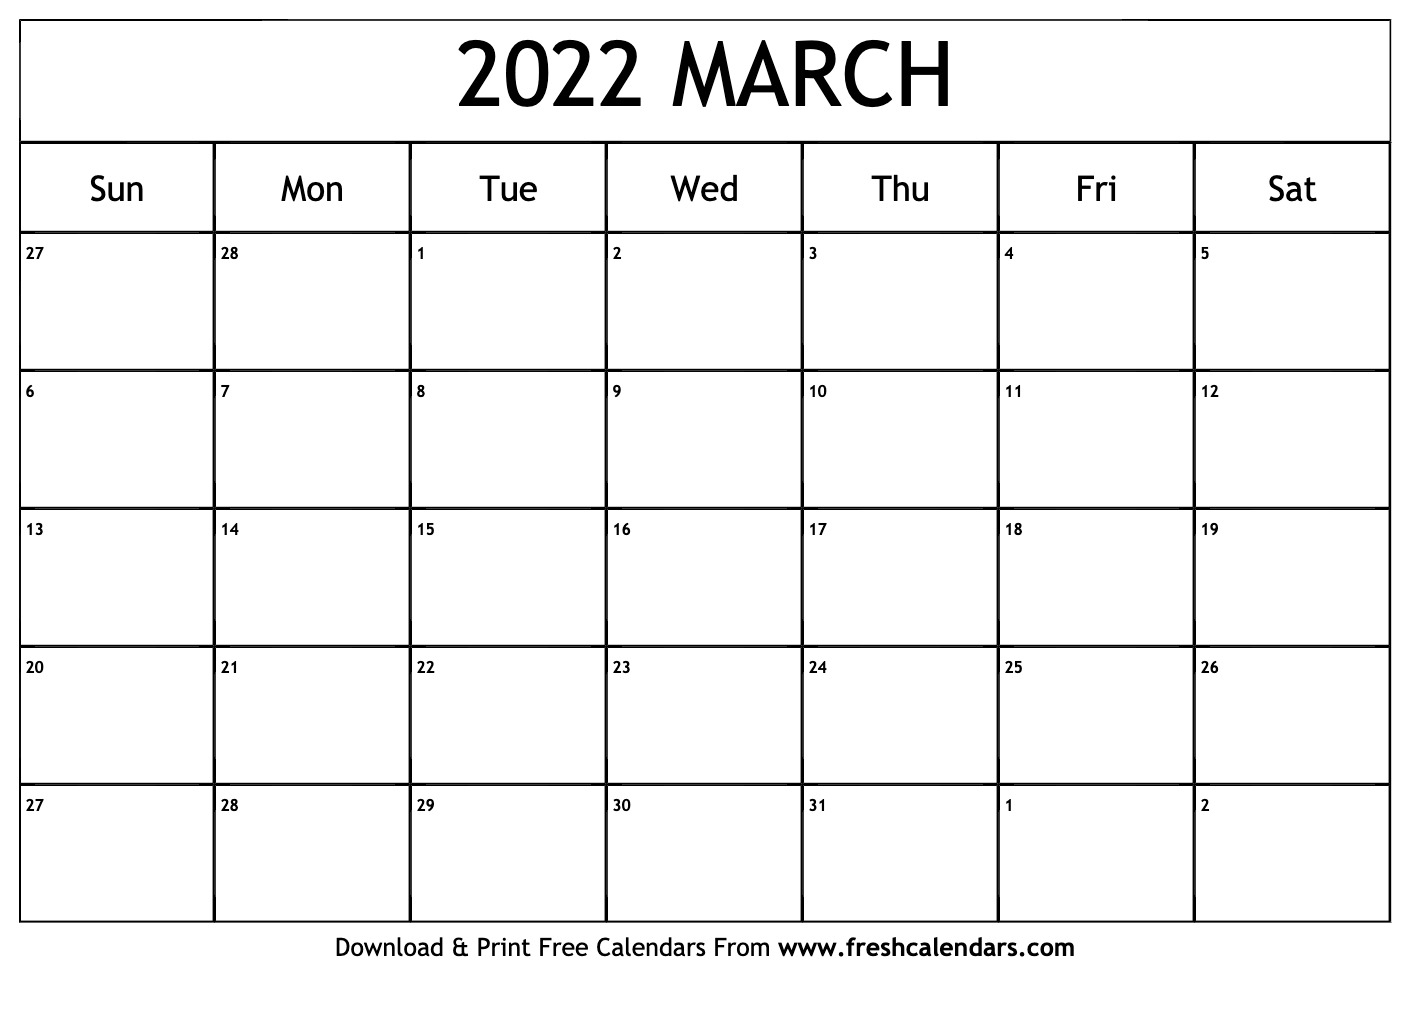 Get Calendar 2022 Jan Feb March